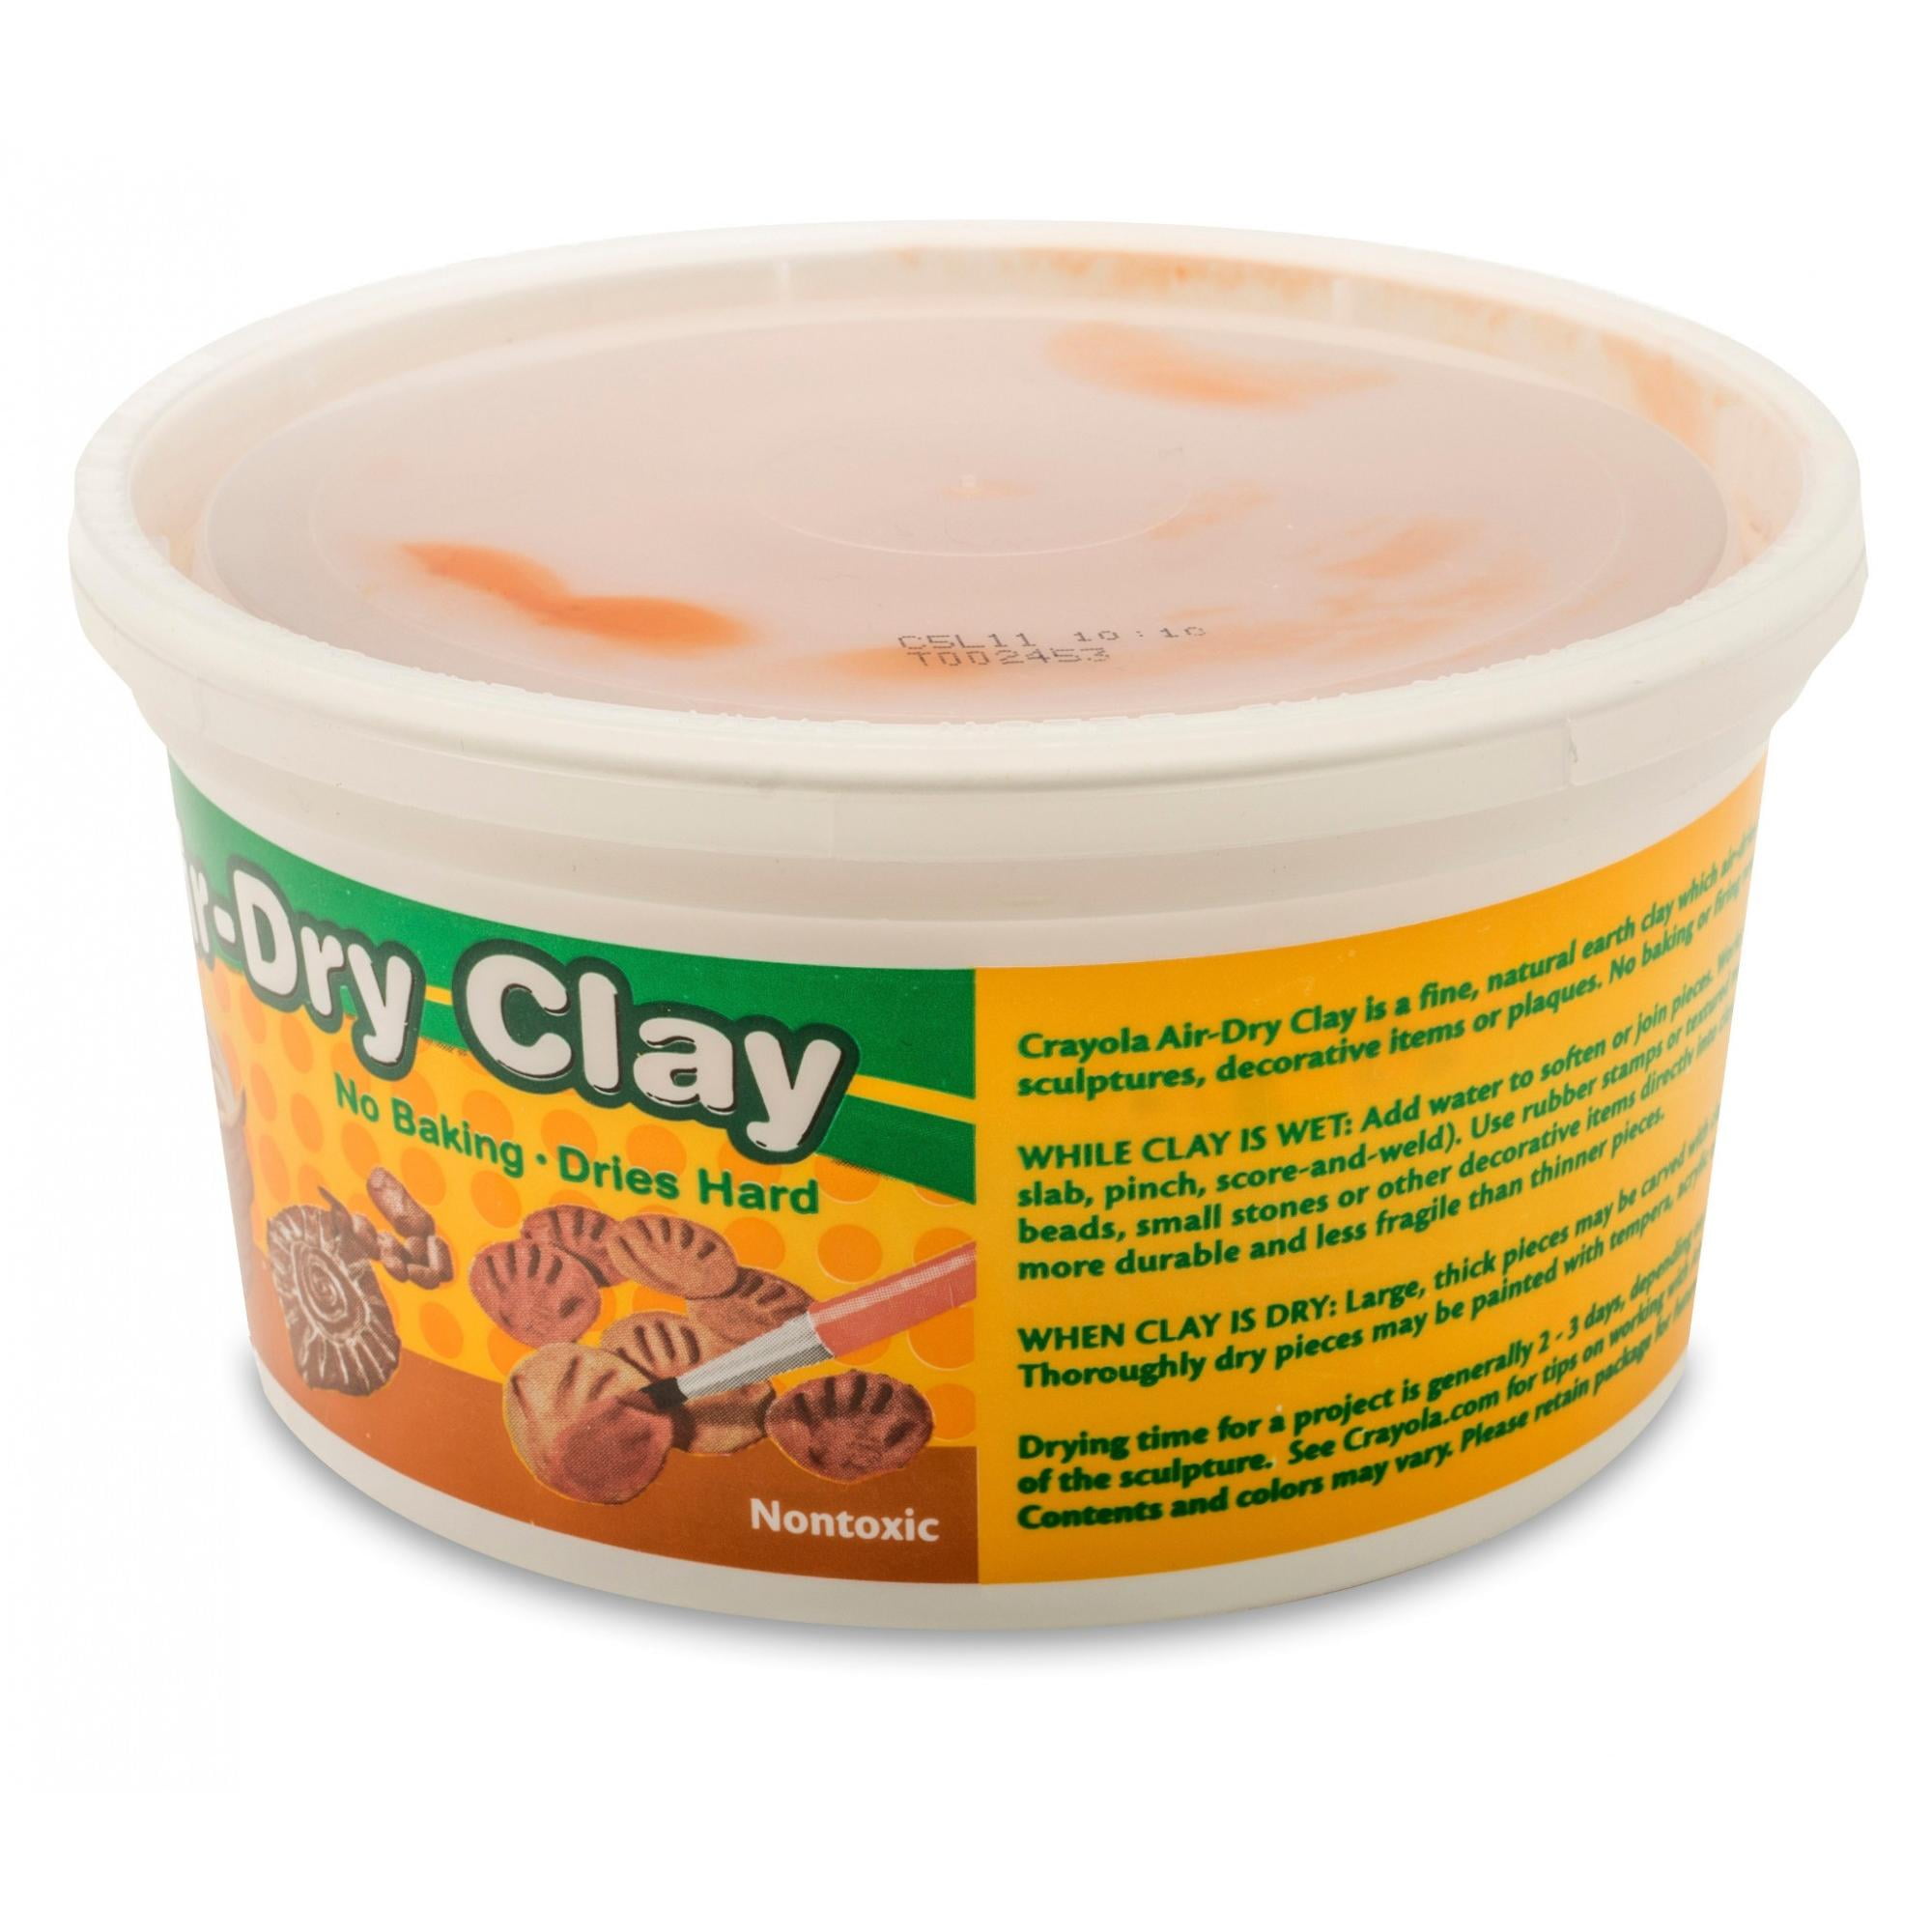 The Teachers' Lounge®  Air-Dry Clay, Terra Cotta, 2.5 lb Tub, Pack of 4